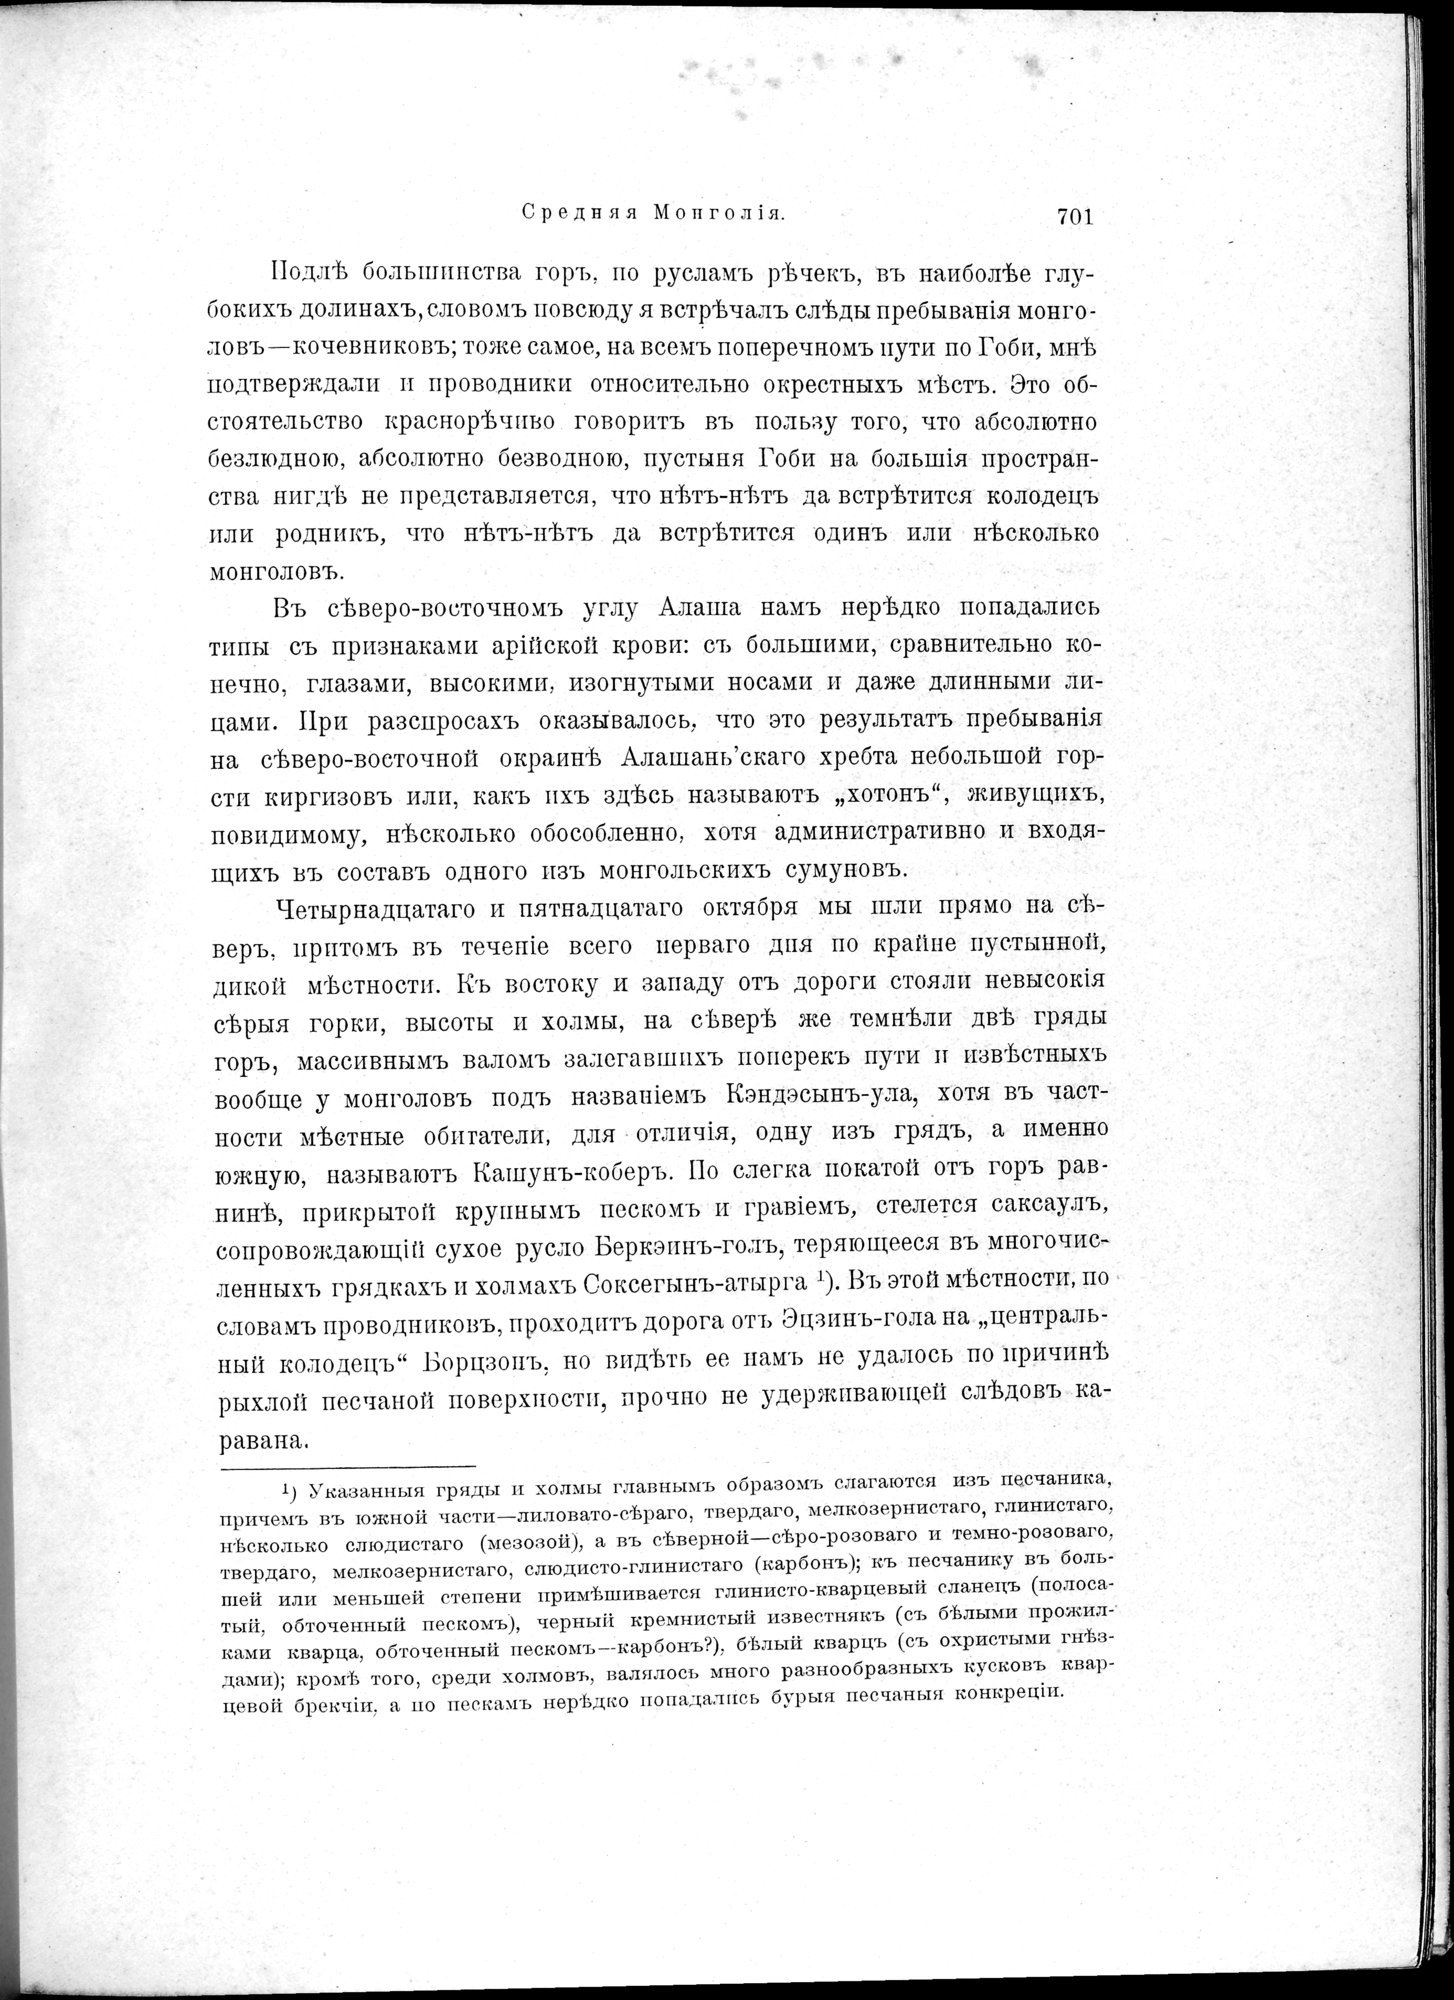 Mongoliia i Kam : vol.2 / Page 539 (Grayscale High Resolution Image)